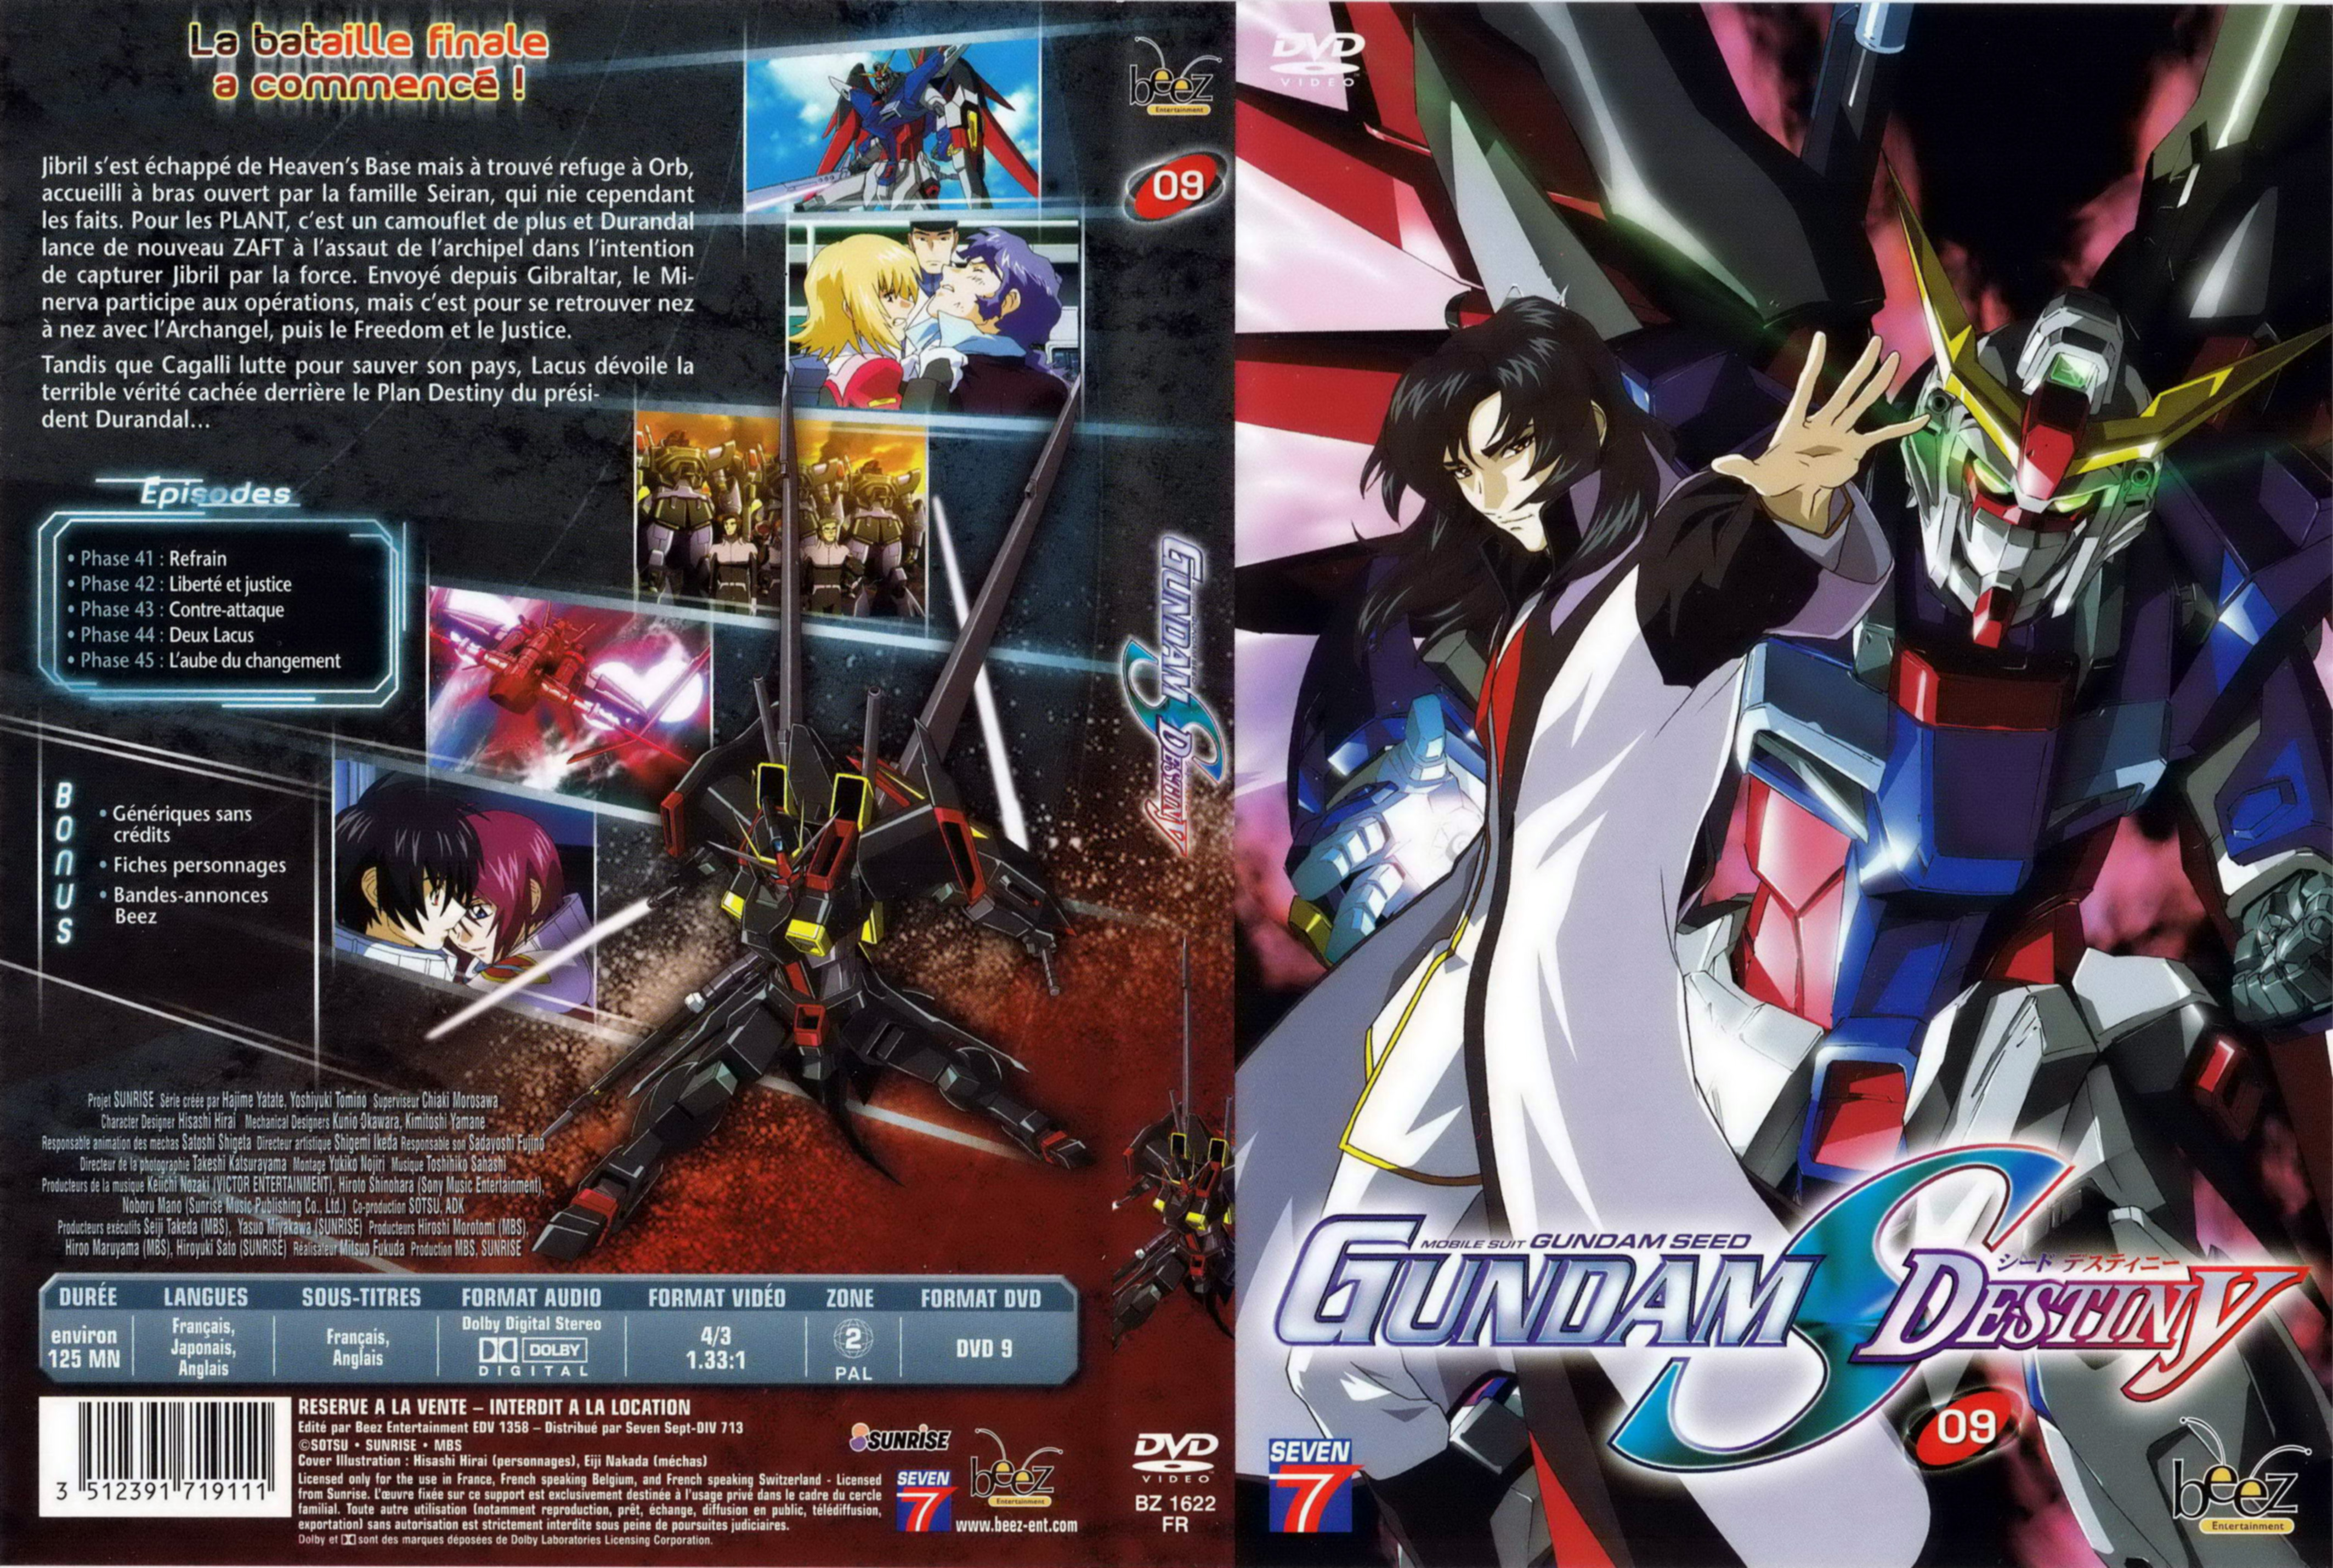 Jaquette DVD Gundam destiny vol 09